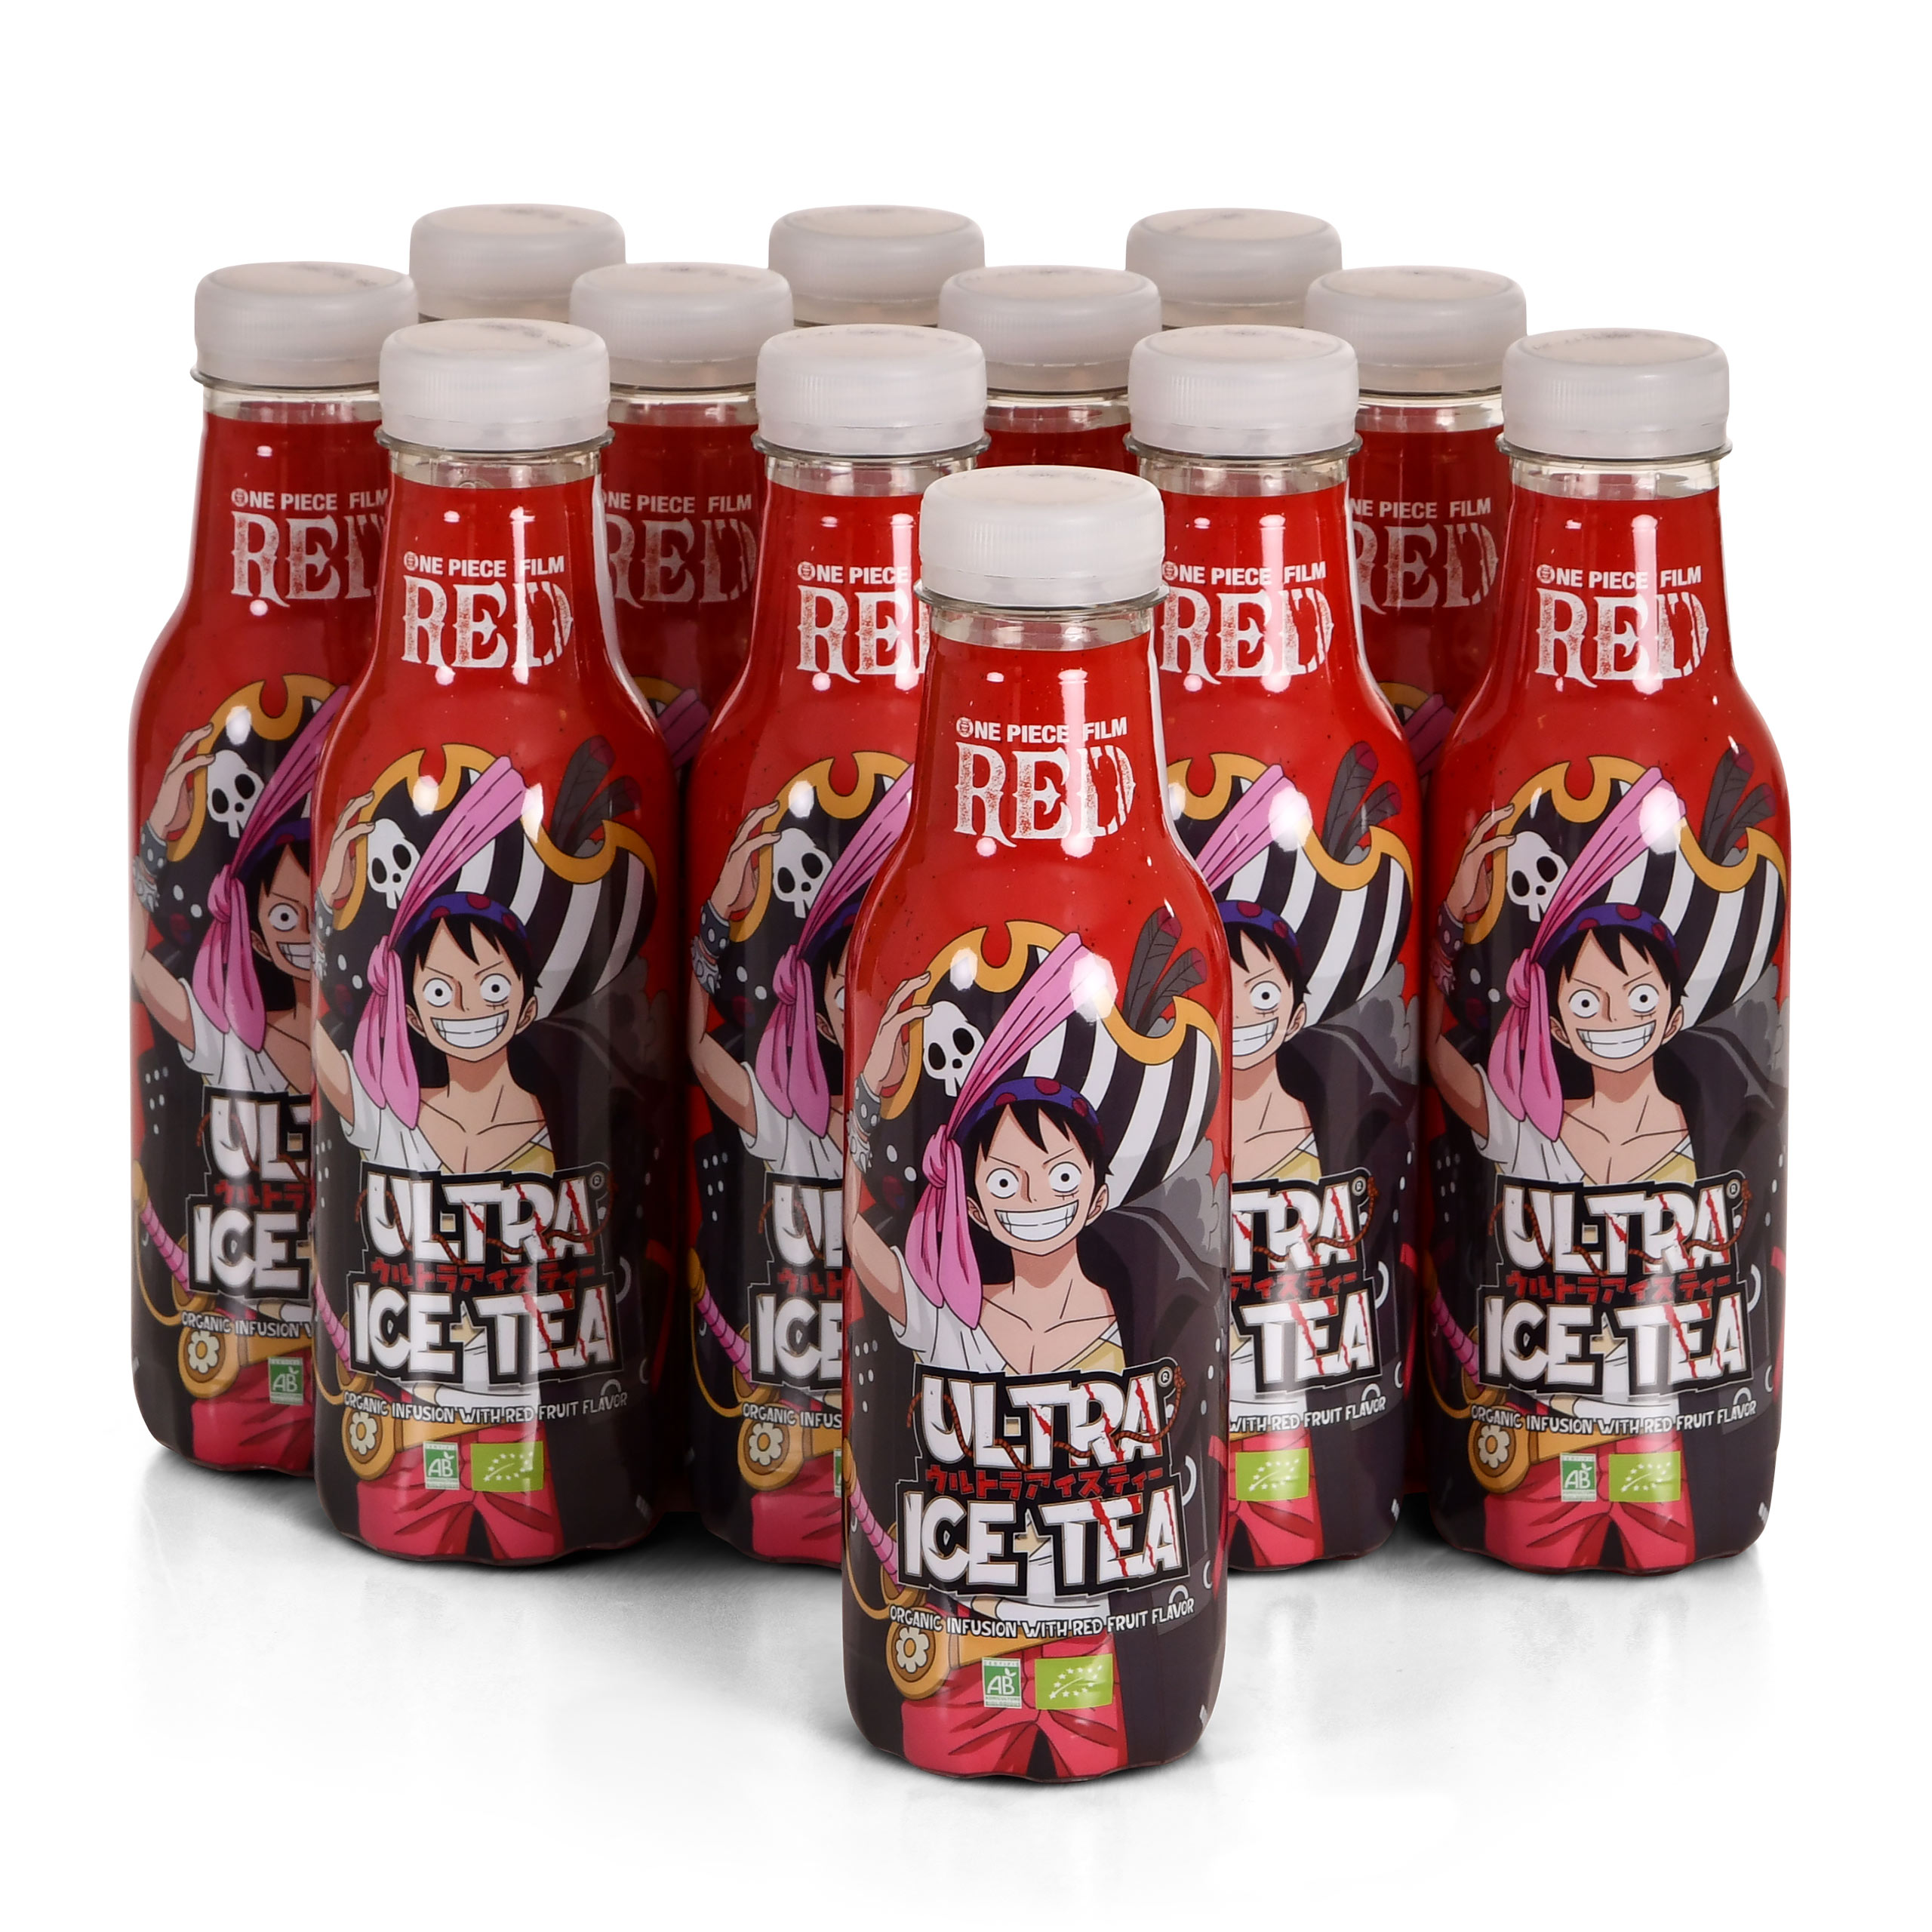 One Piece Red - Ruffy thé glacé bio fruits rouges paquet de 12